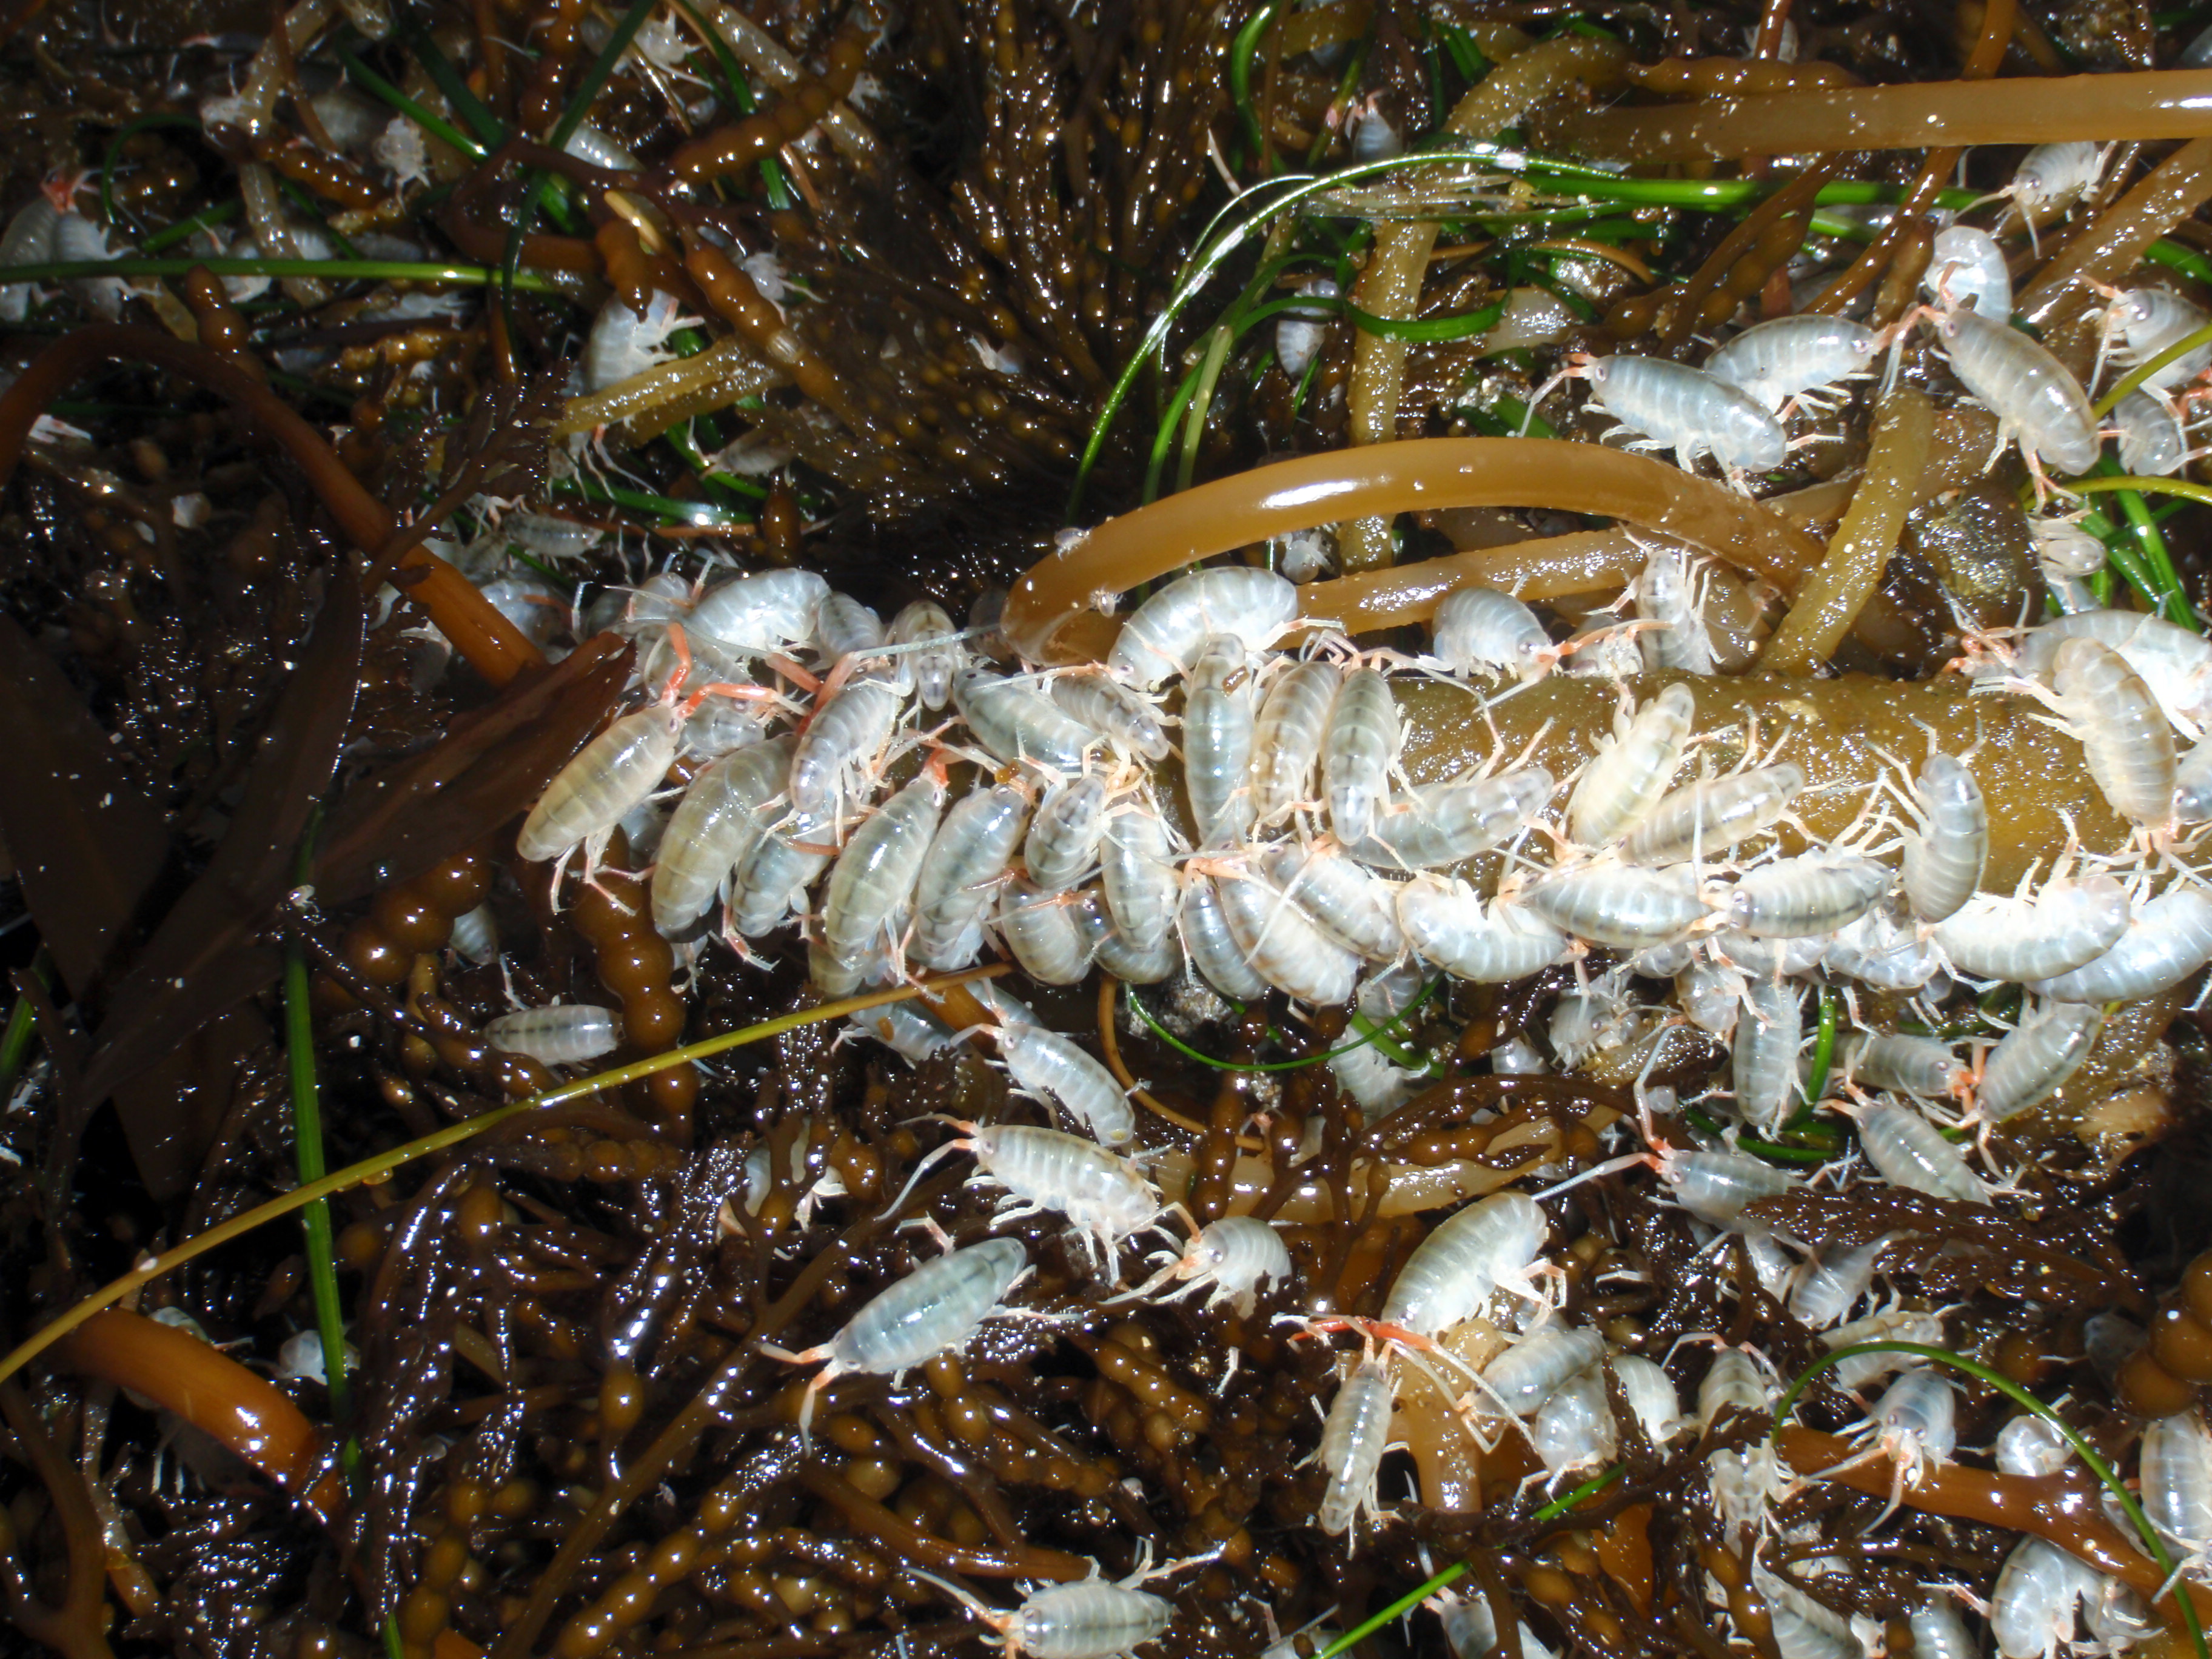 Sand-hopper crustaceans feed on drift kelp washed ashore on a North Coast beach. Credit: K. Nielsen